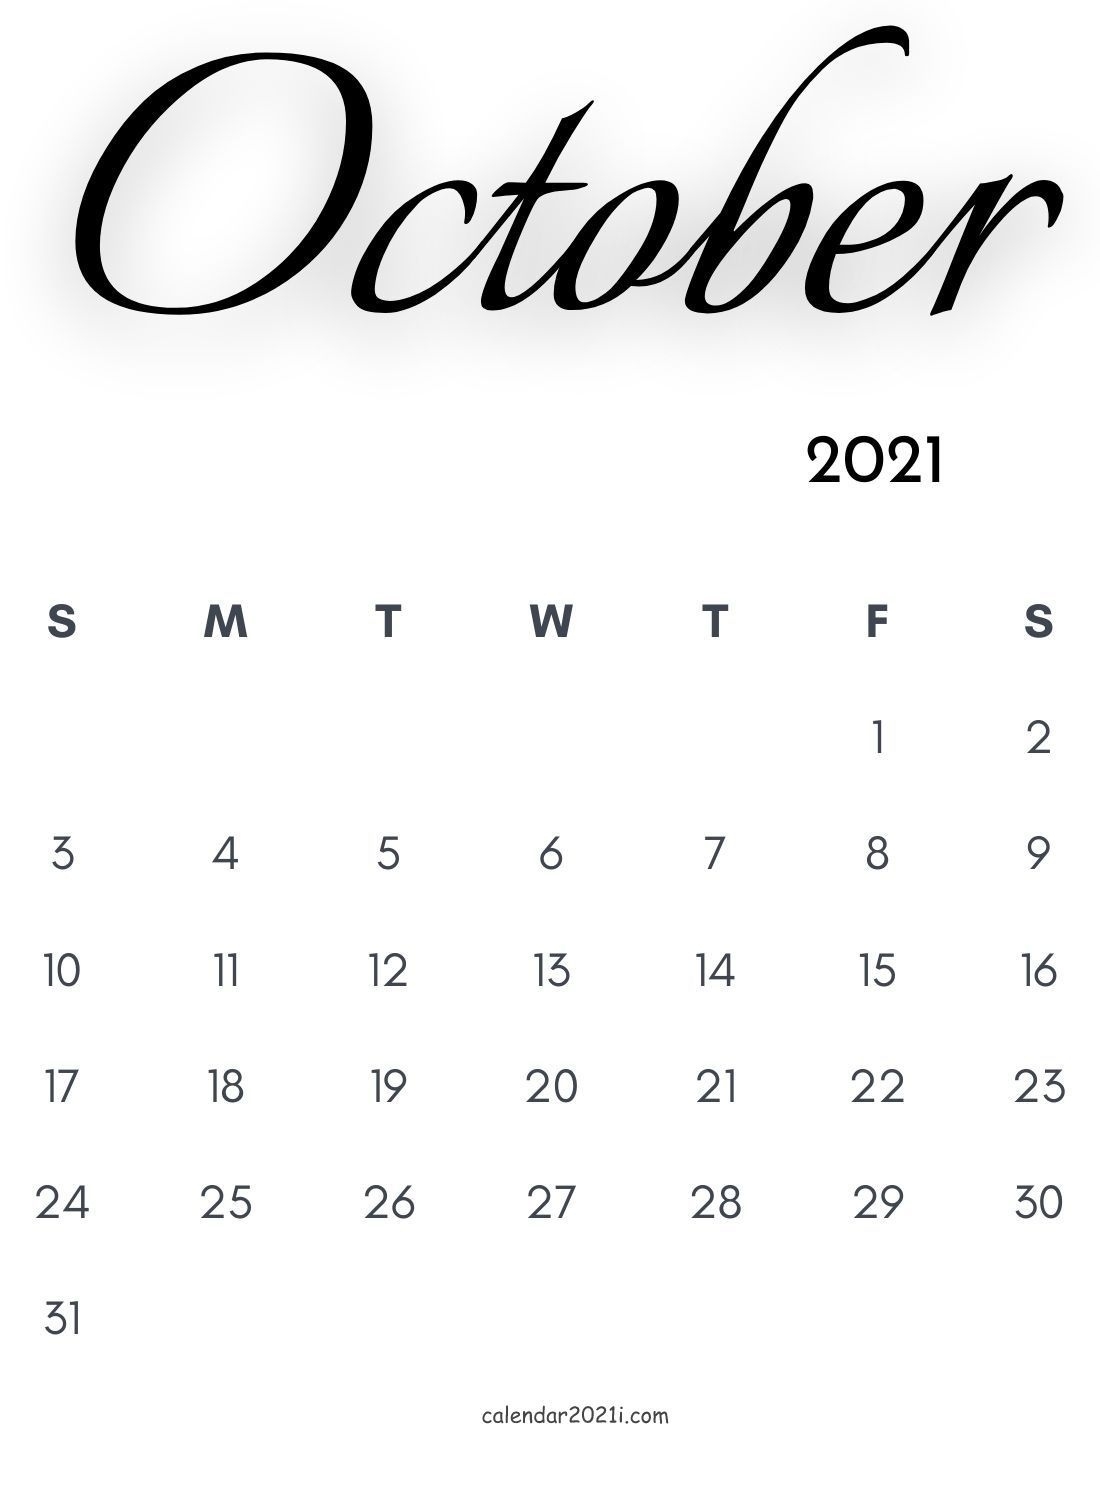 October 2021 Calligraphy Calendar Free Download Cute October 2021 Calendar